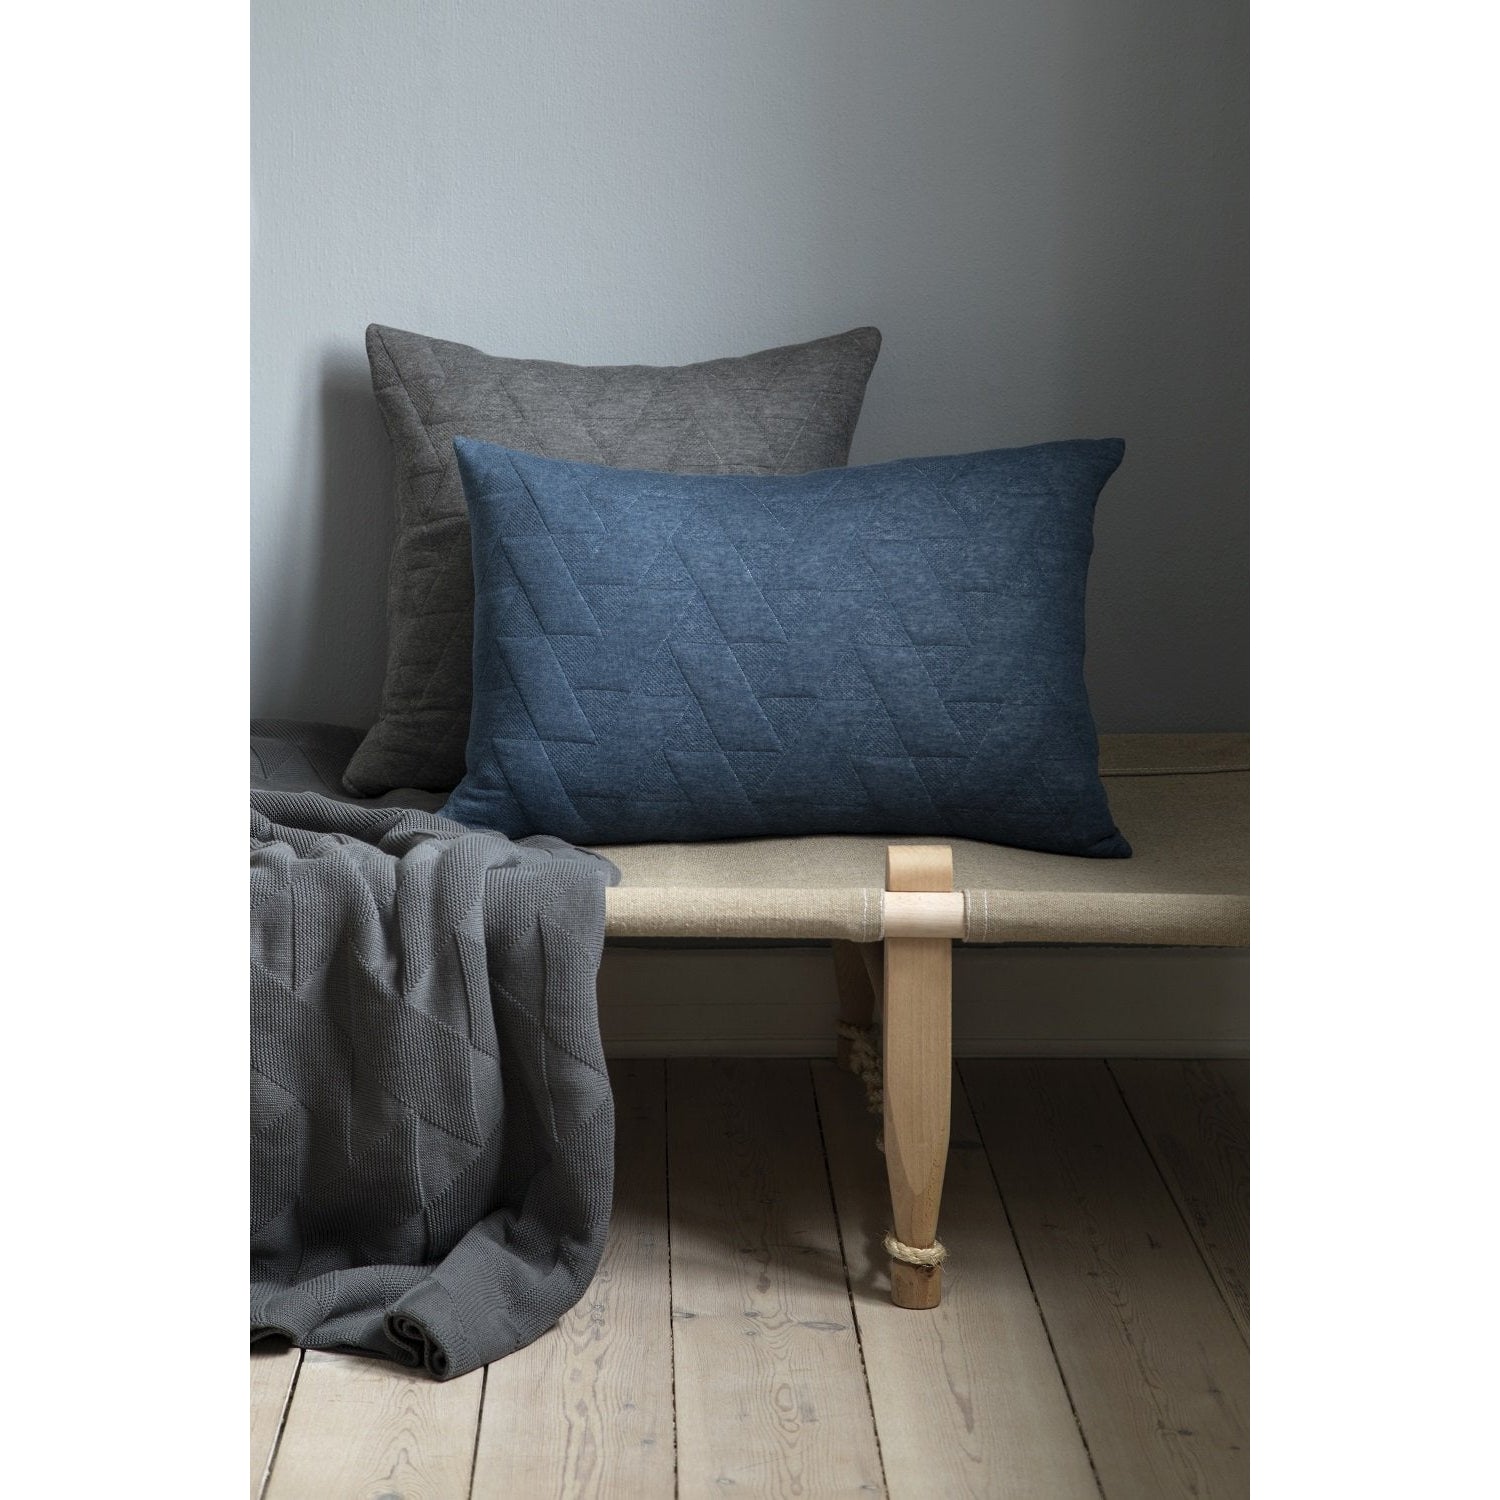 Architectmade Finn Juhl Pattern Cushion, Grey